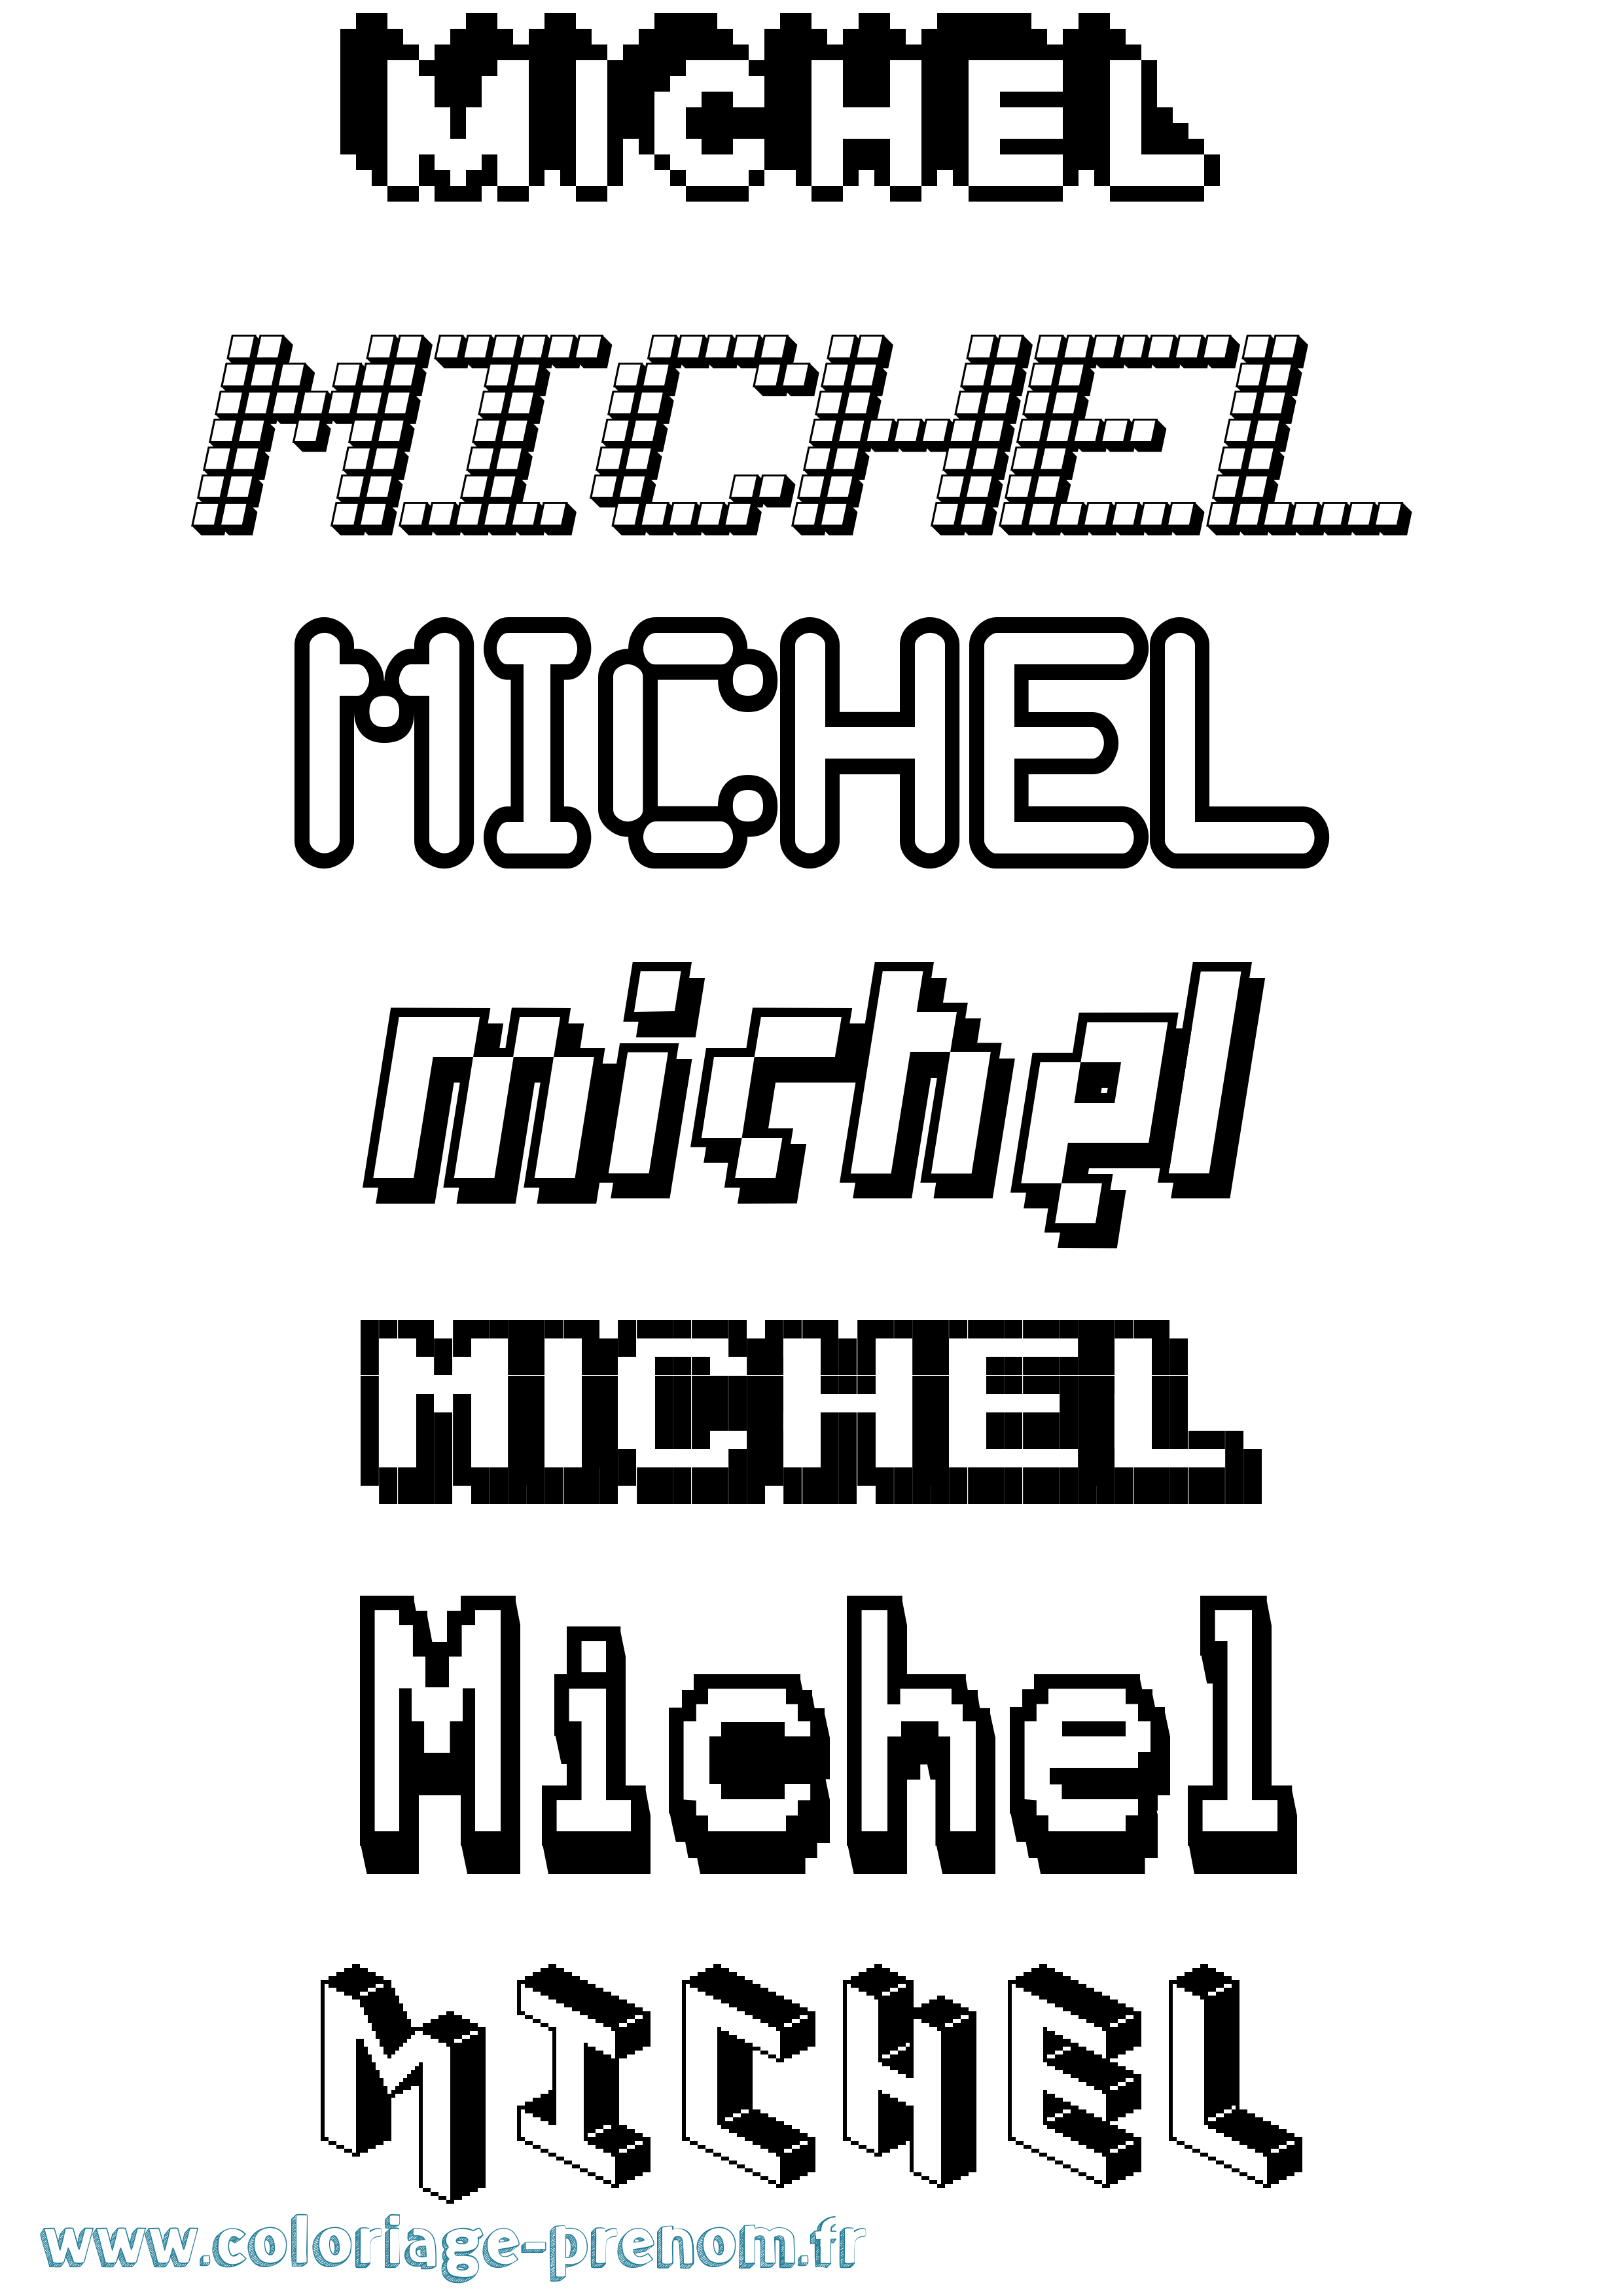 Coloriage prénom Michel